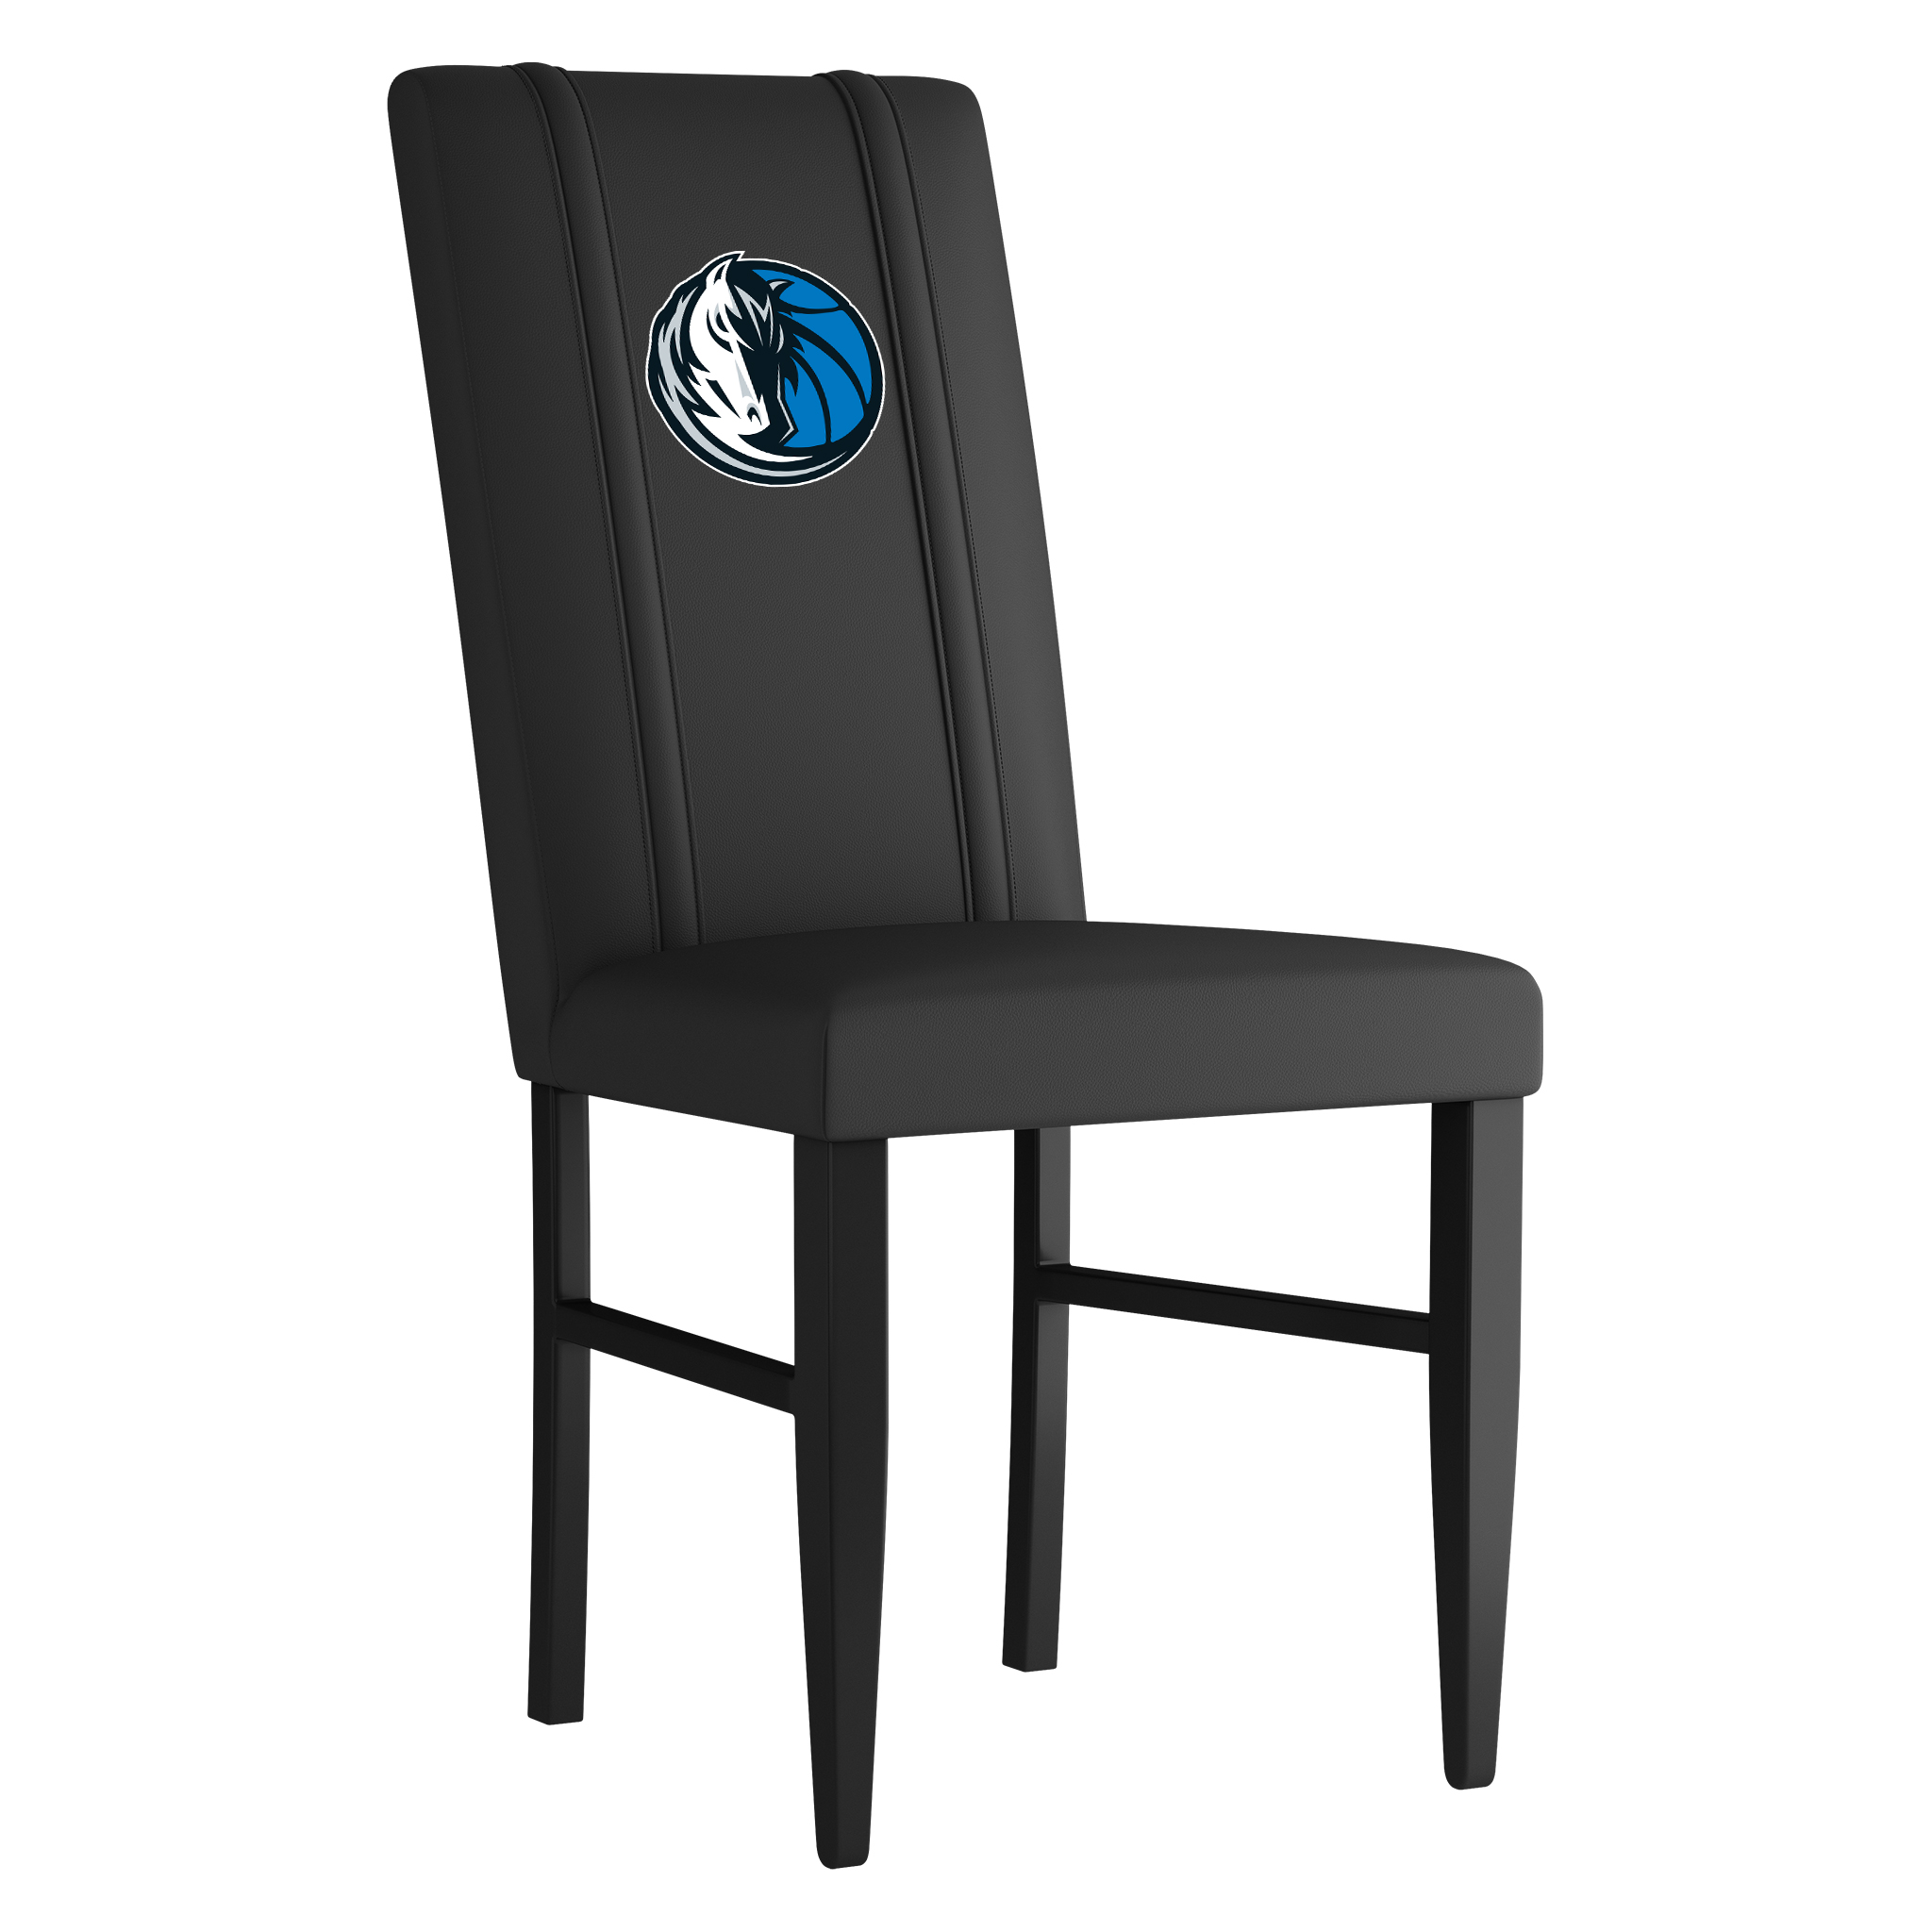 Dallas Mavericks Side Chair 2000 With Dallas Mavericks